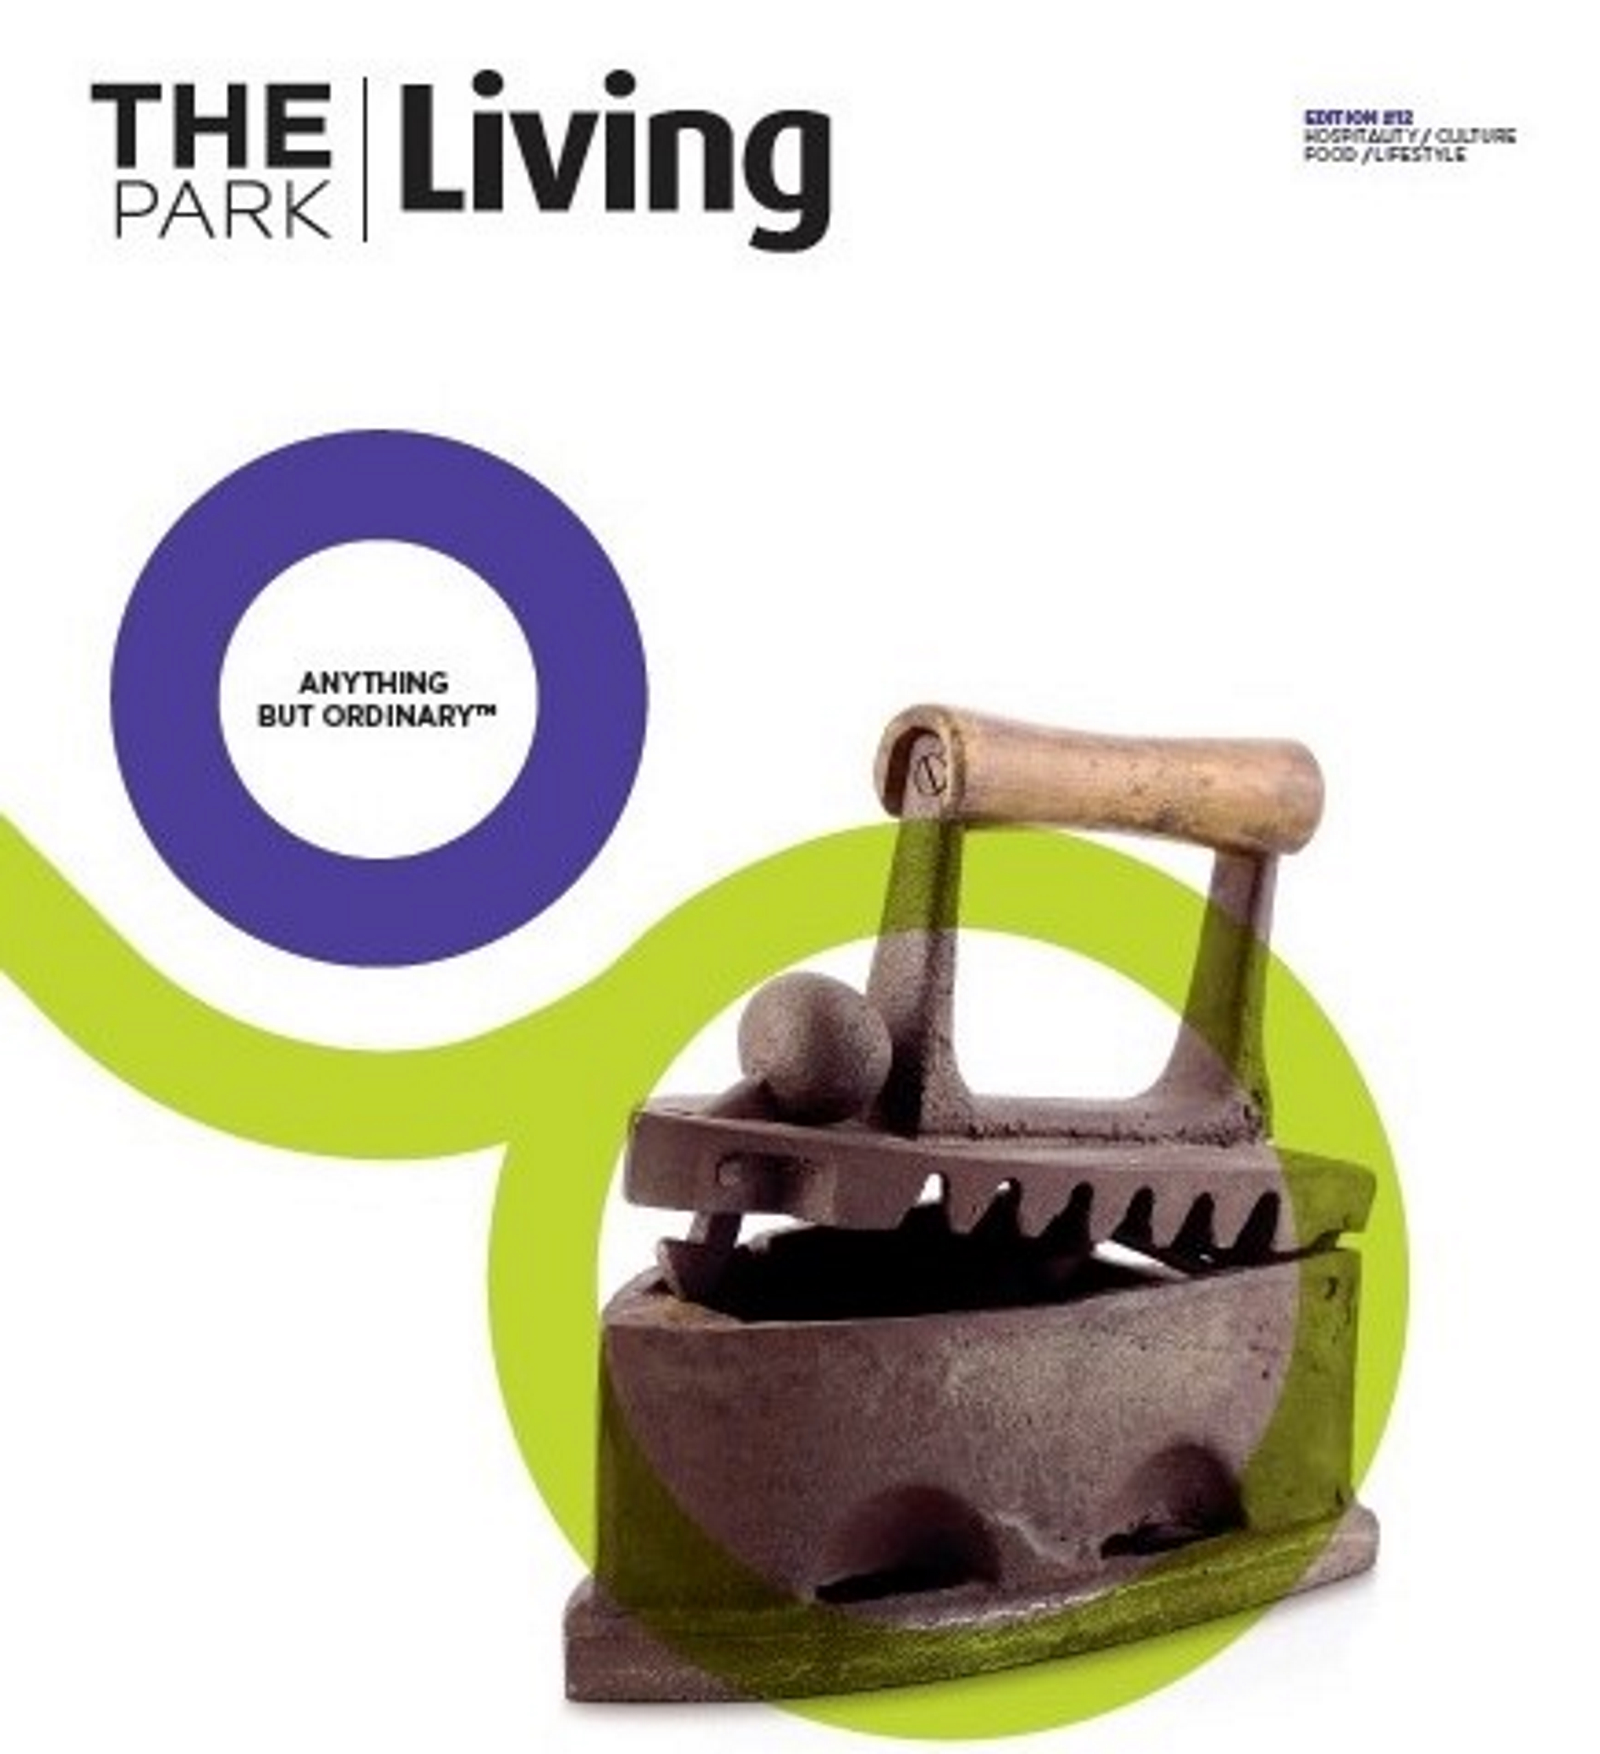 The Park Living Magazine Edition 12